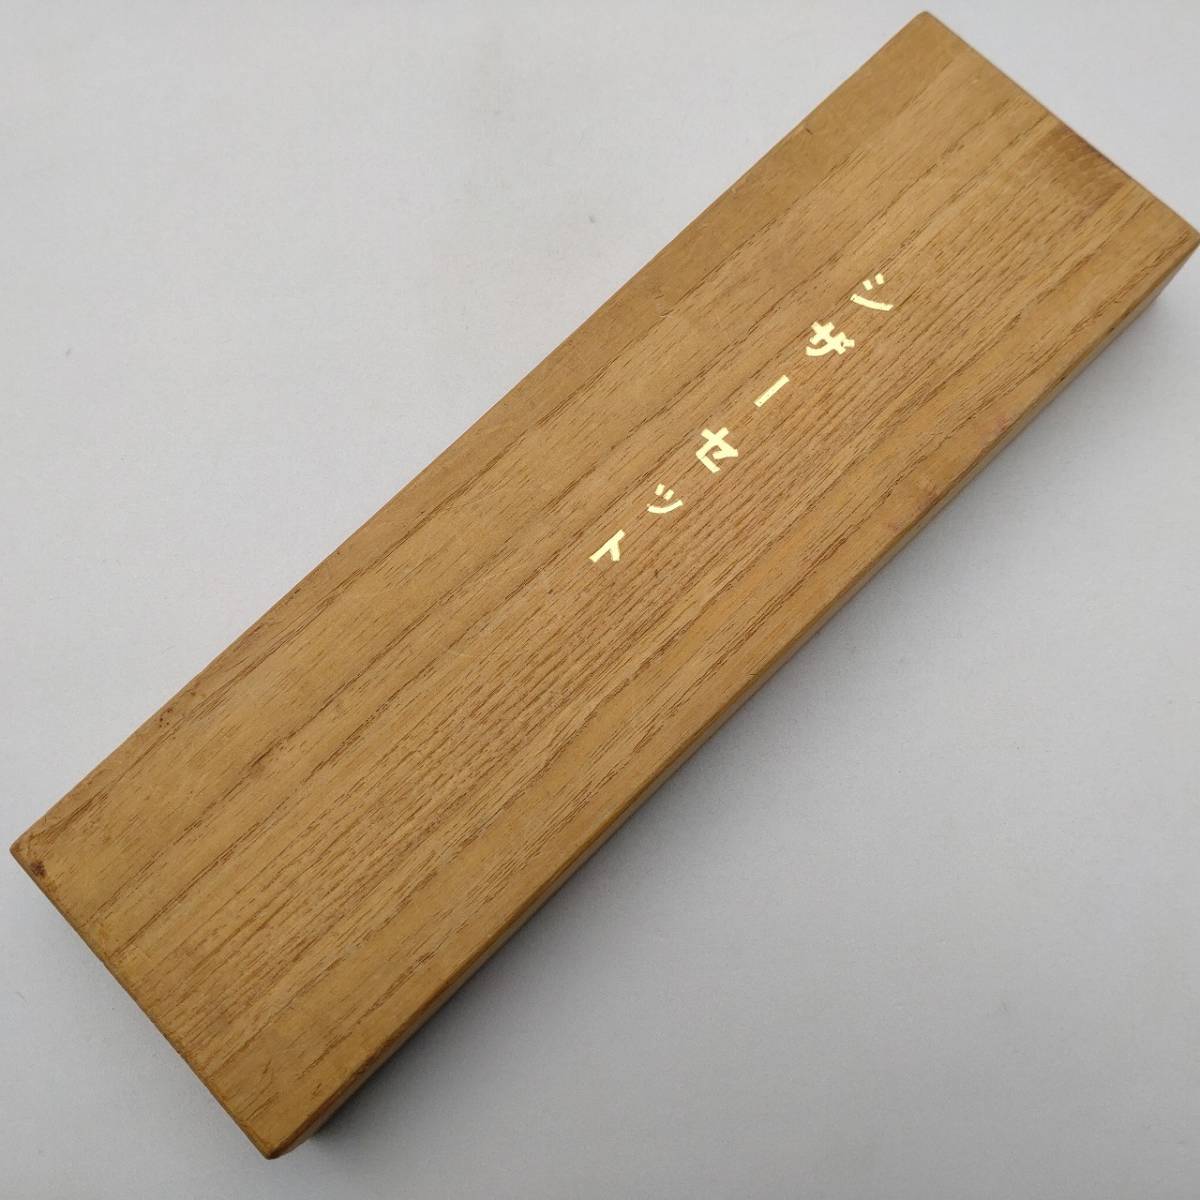 si The - комплект ni ключ NIKKY. общая длина примерно 205. нож для бумаги складной нож канцелярские товары гравировка рисунок дерево в коробке [0353][b]